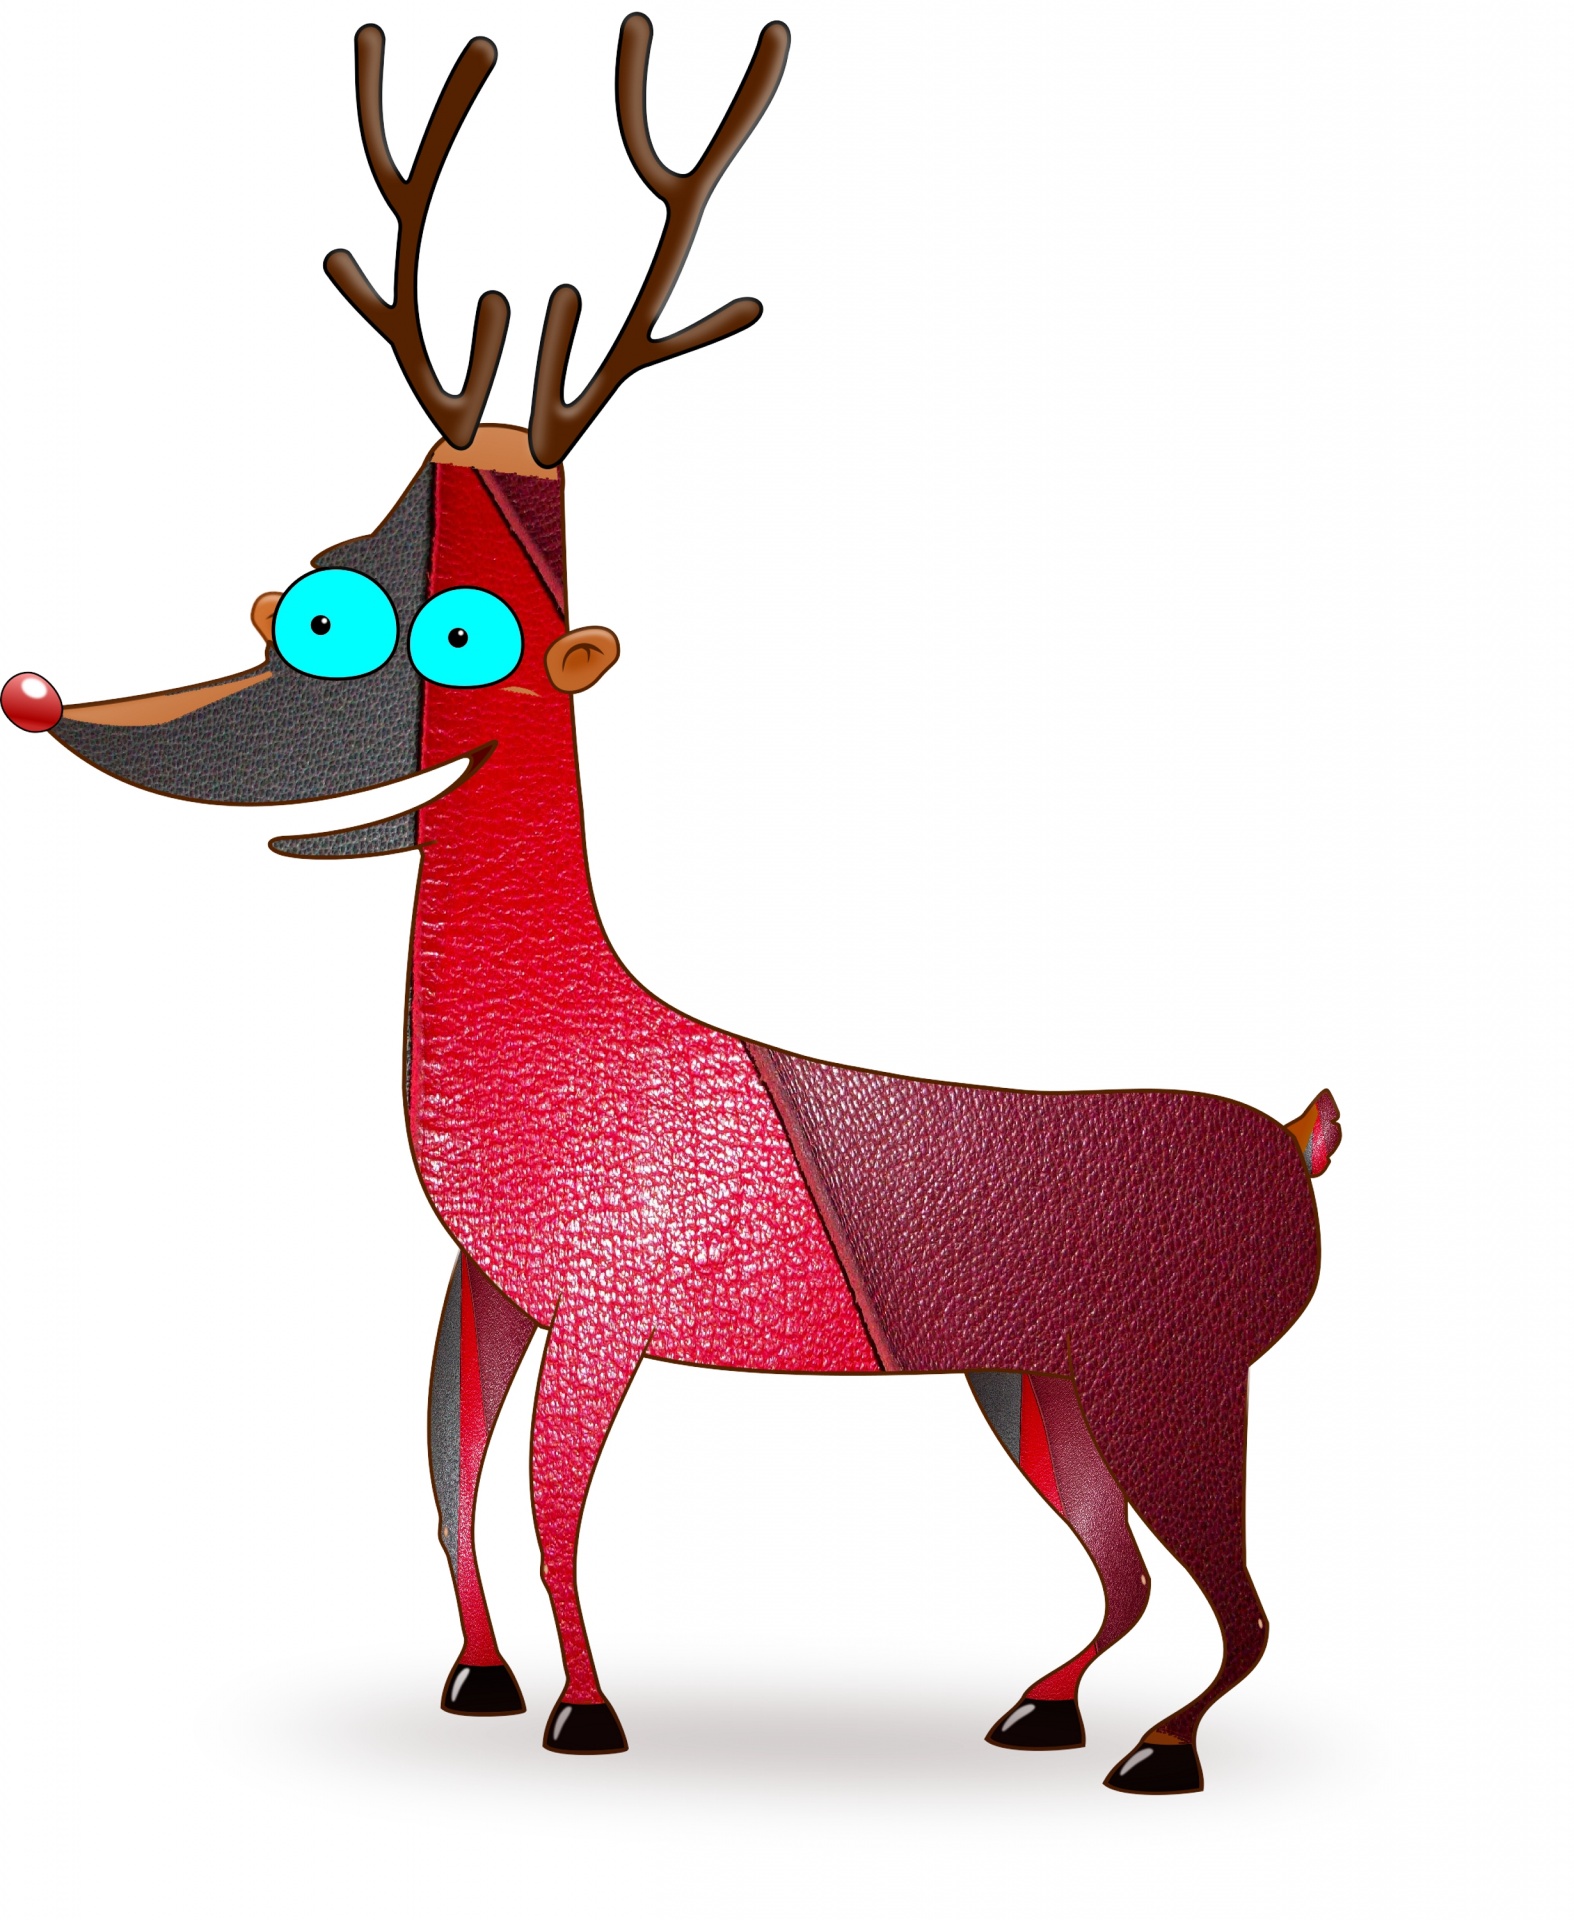 Download Red Reindeer Cartoon Free Photo.